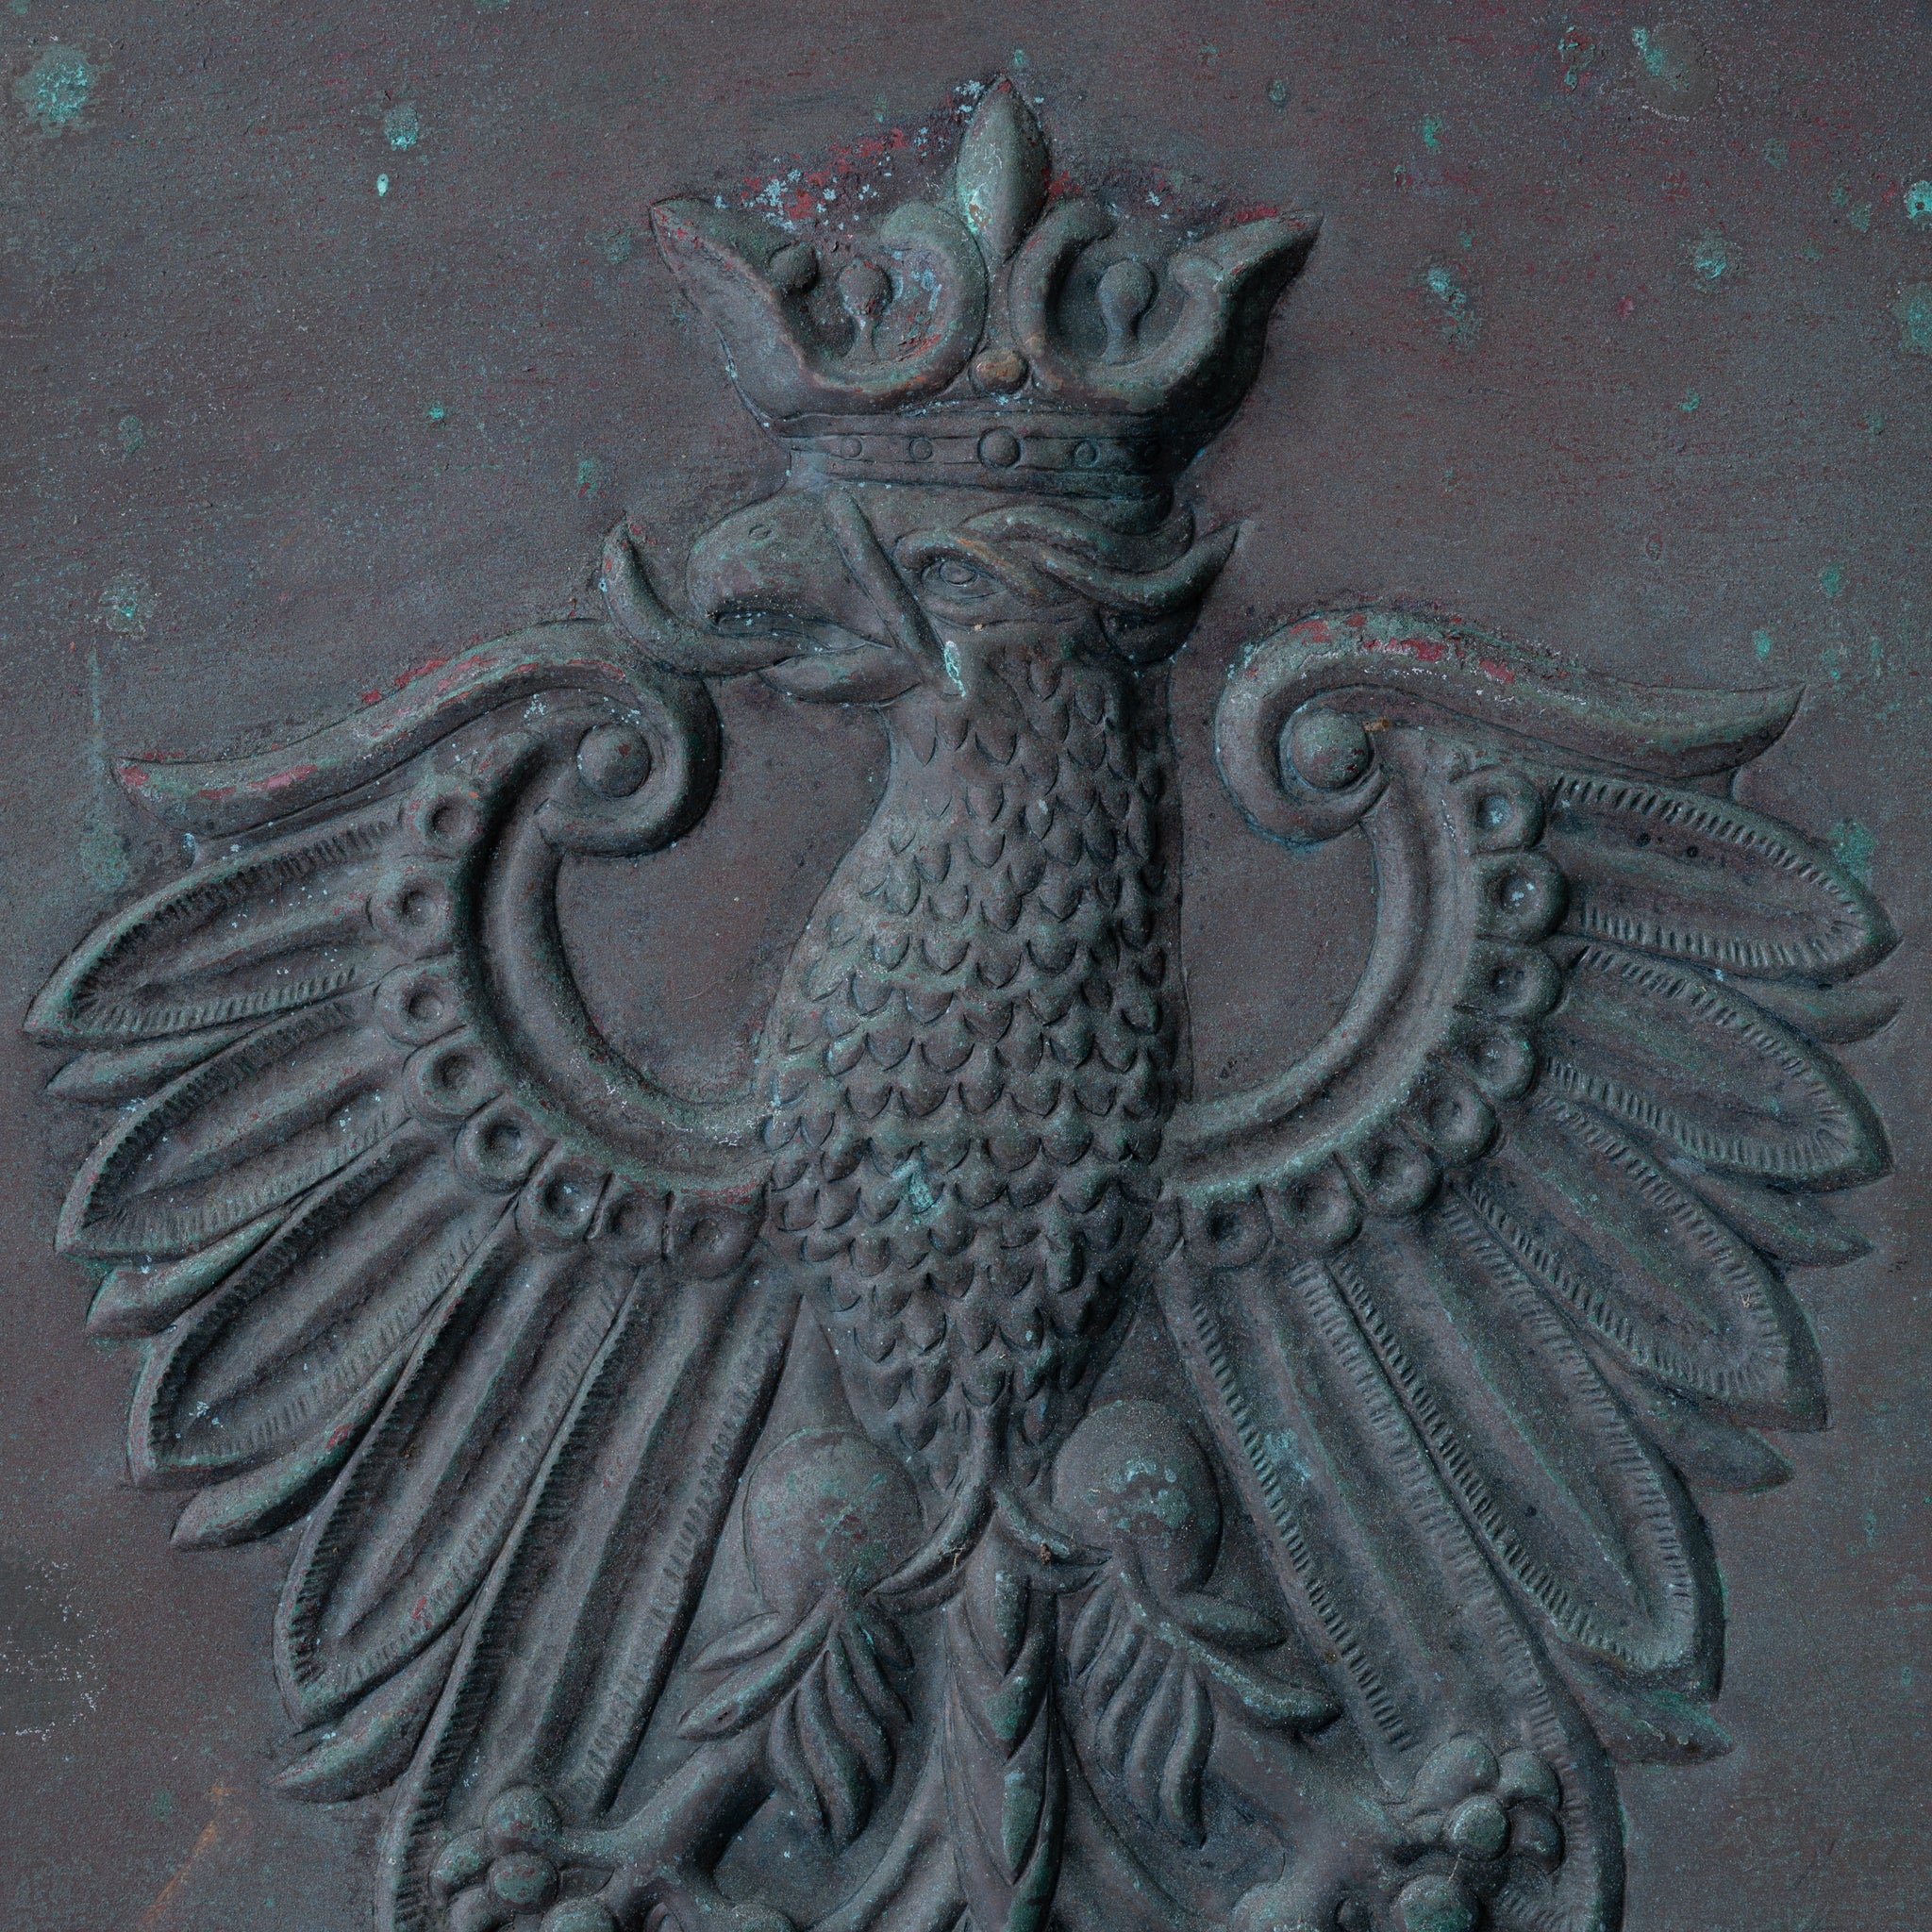 Polish Coat of Arms Copper Relief Plaque